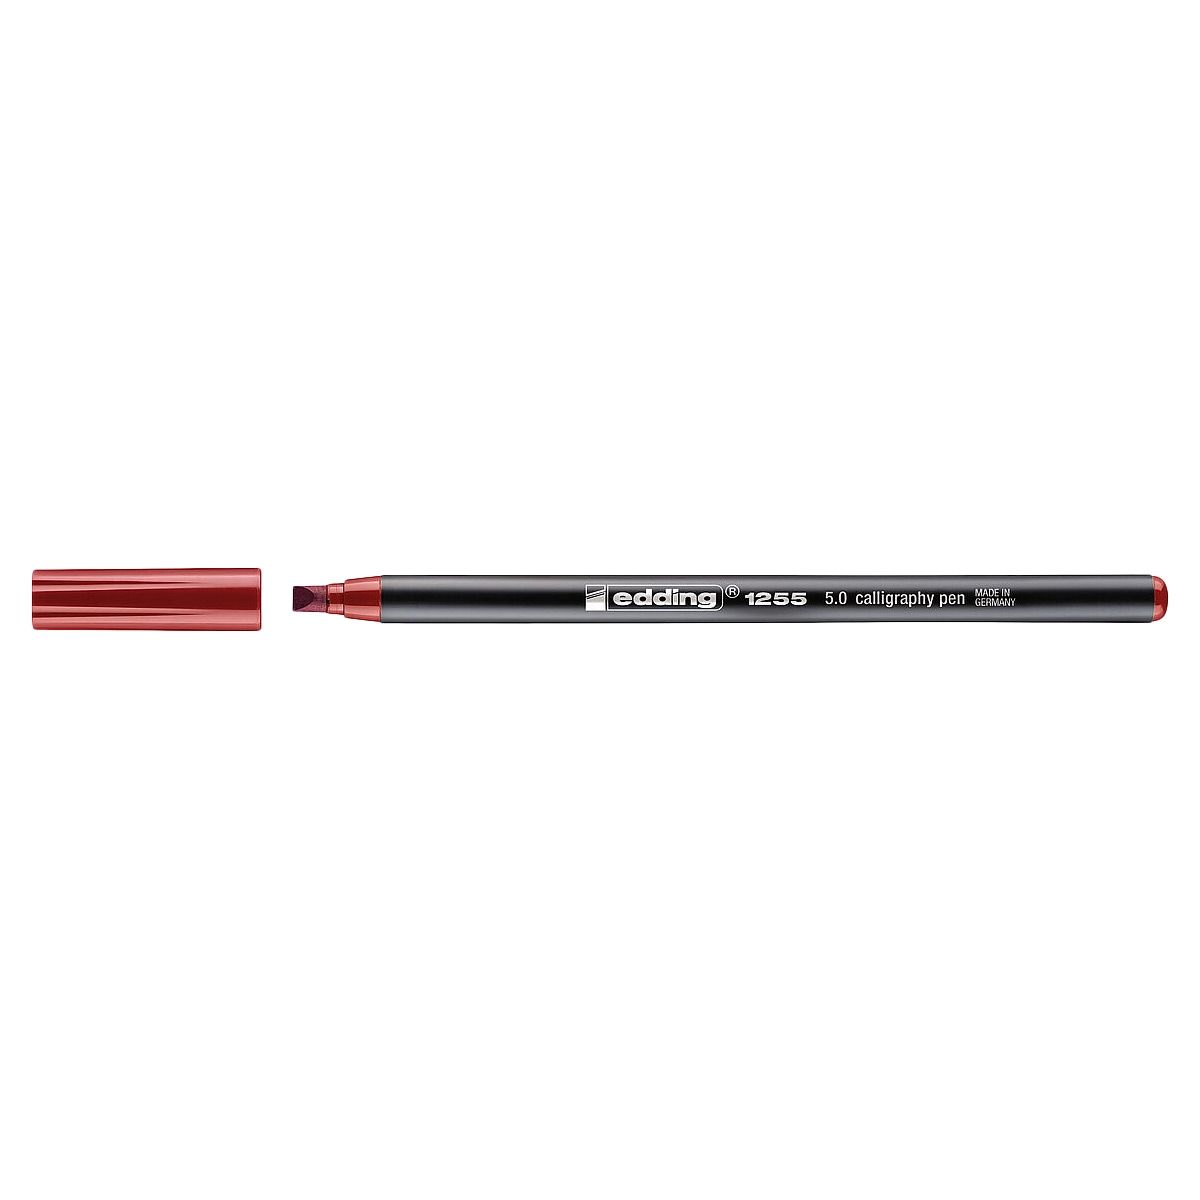 Edding 1255 Calligraphy Pen Set of 3 Crimson Lake (Assorted Nibs)